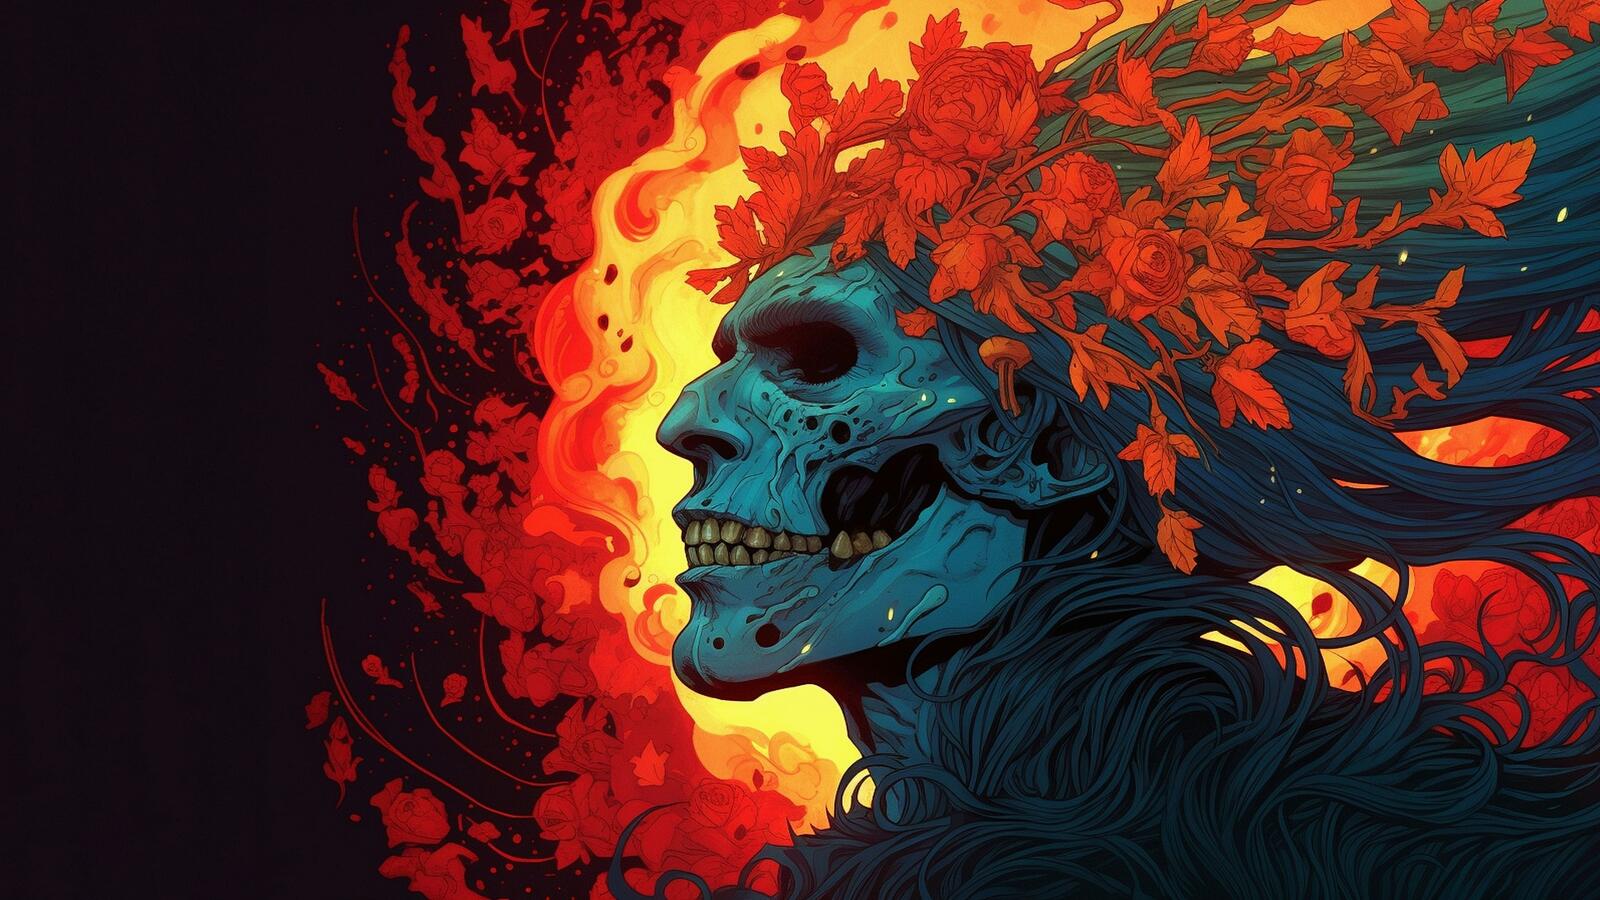 Бесплатное фото Рисунок скелета с цветами на голове